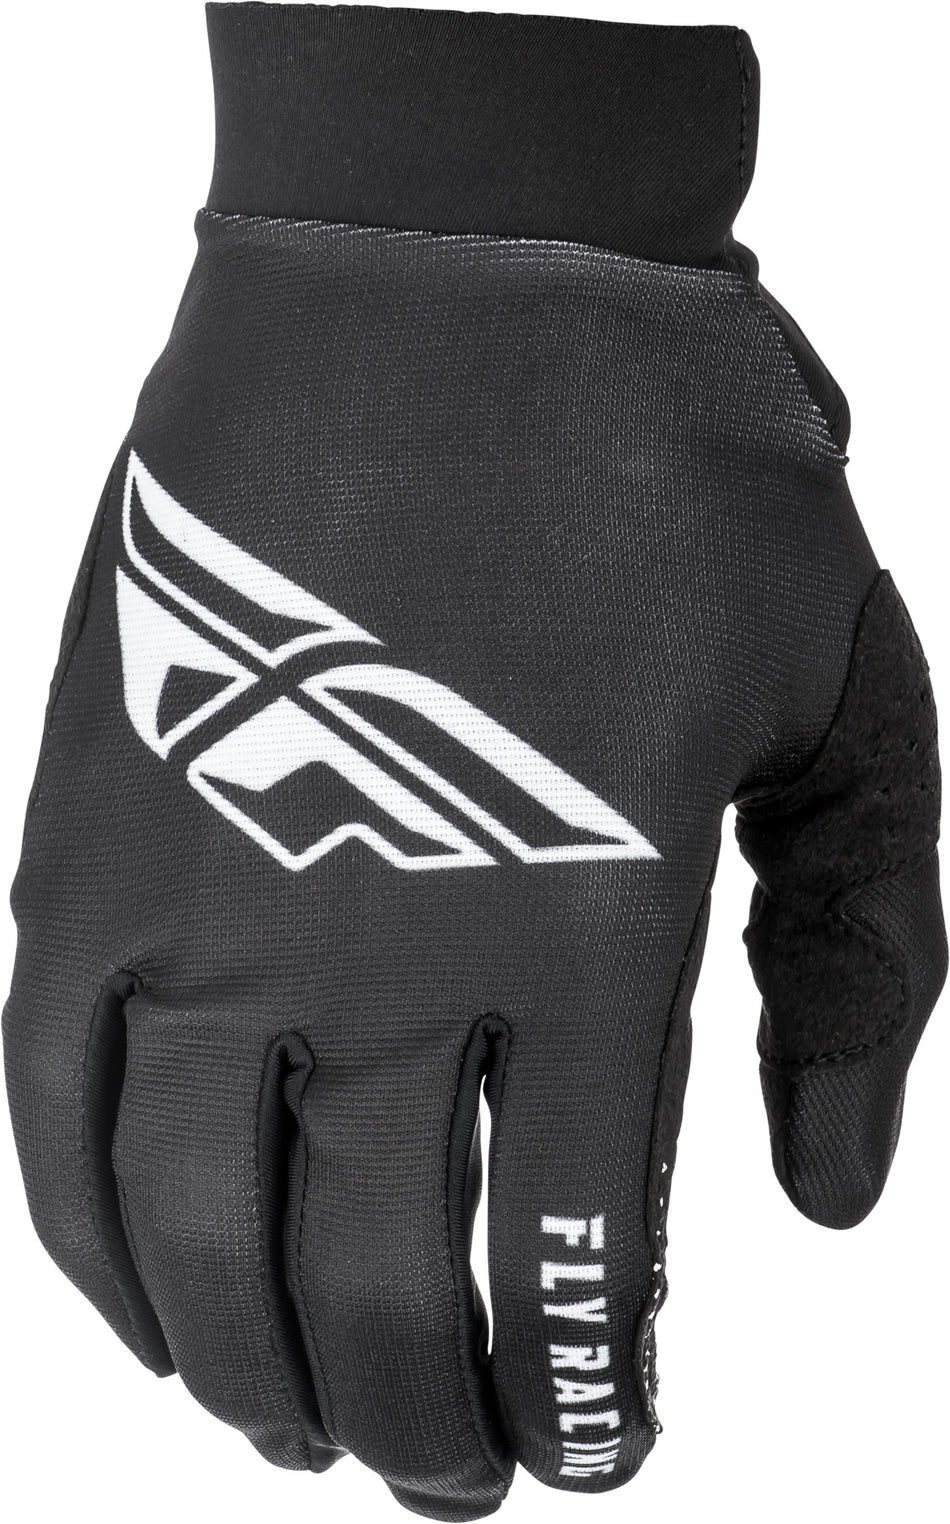 FLY RACING Pro Lite Gloves Black/White Sz 08 372-81008